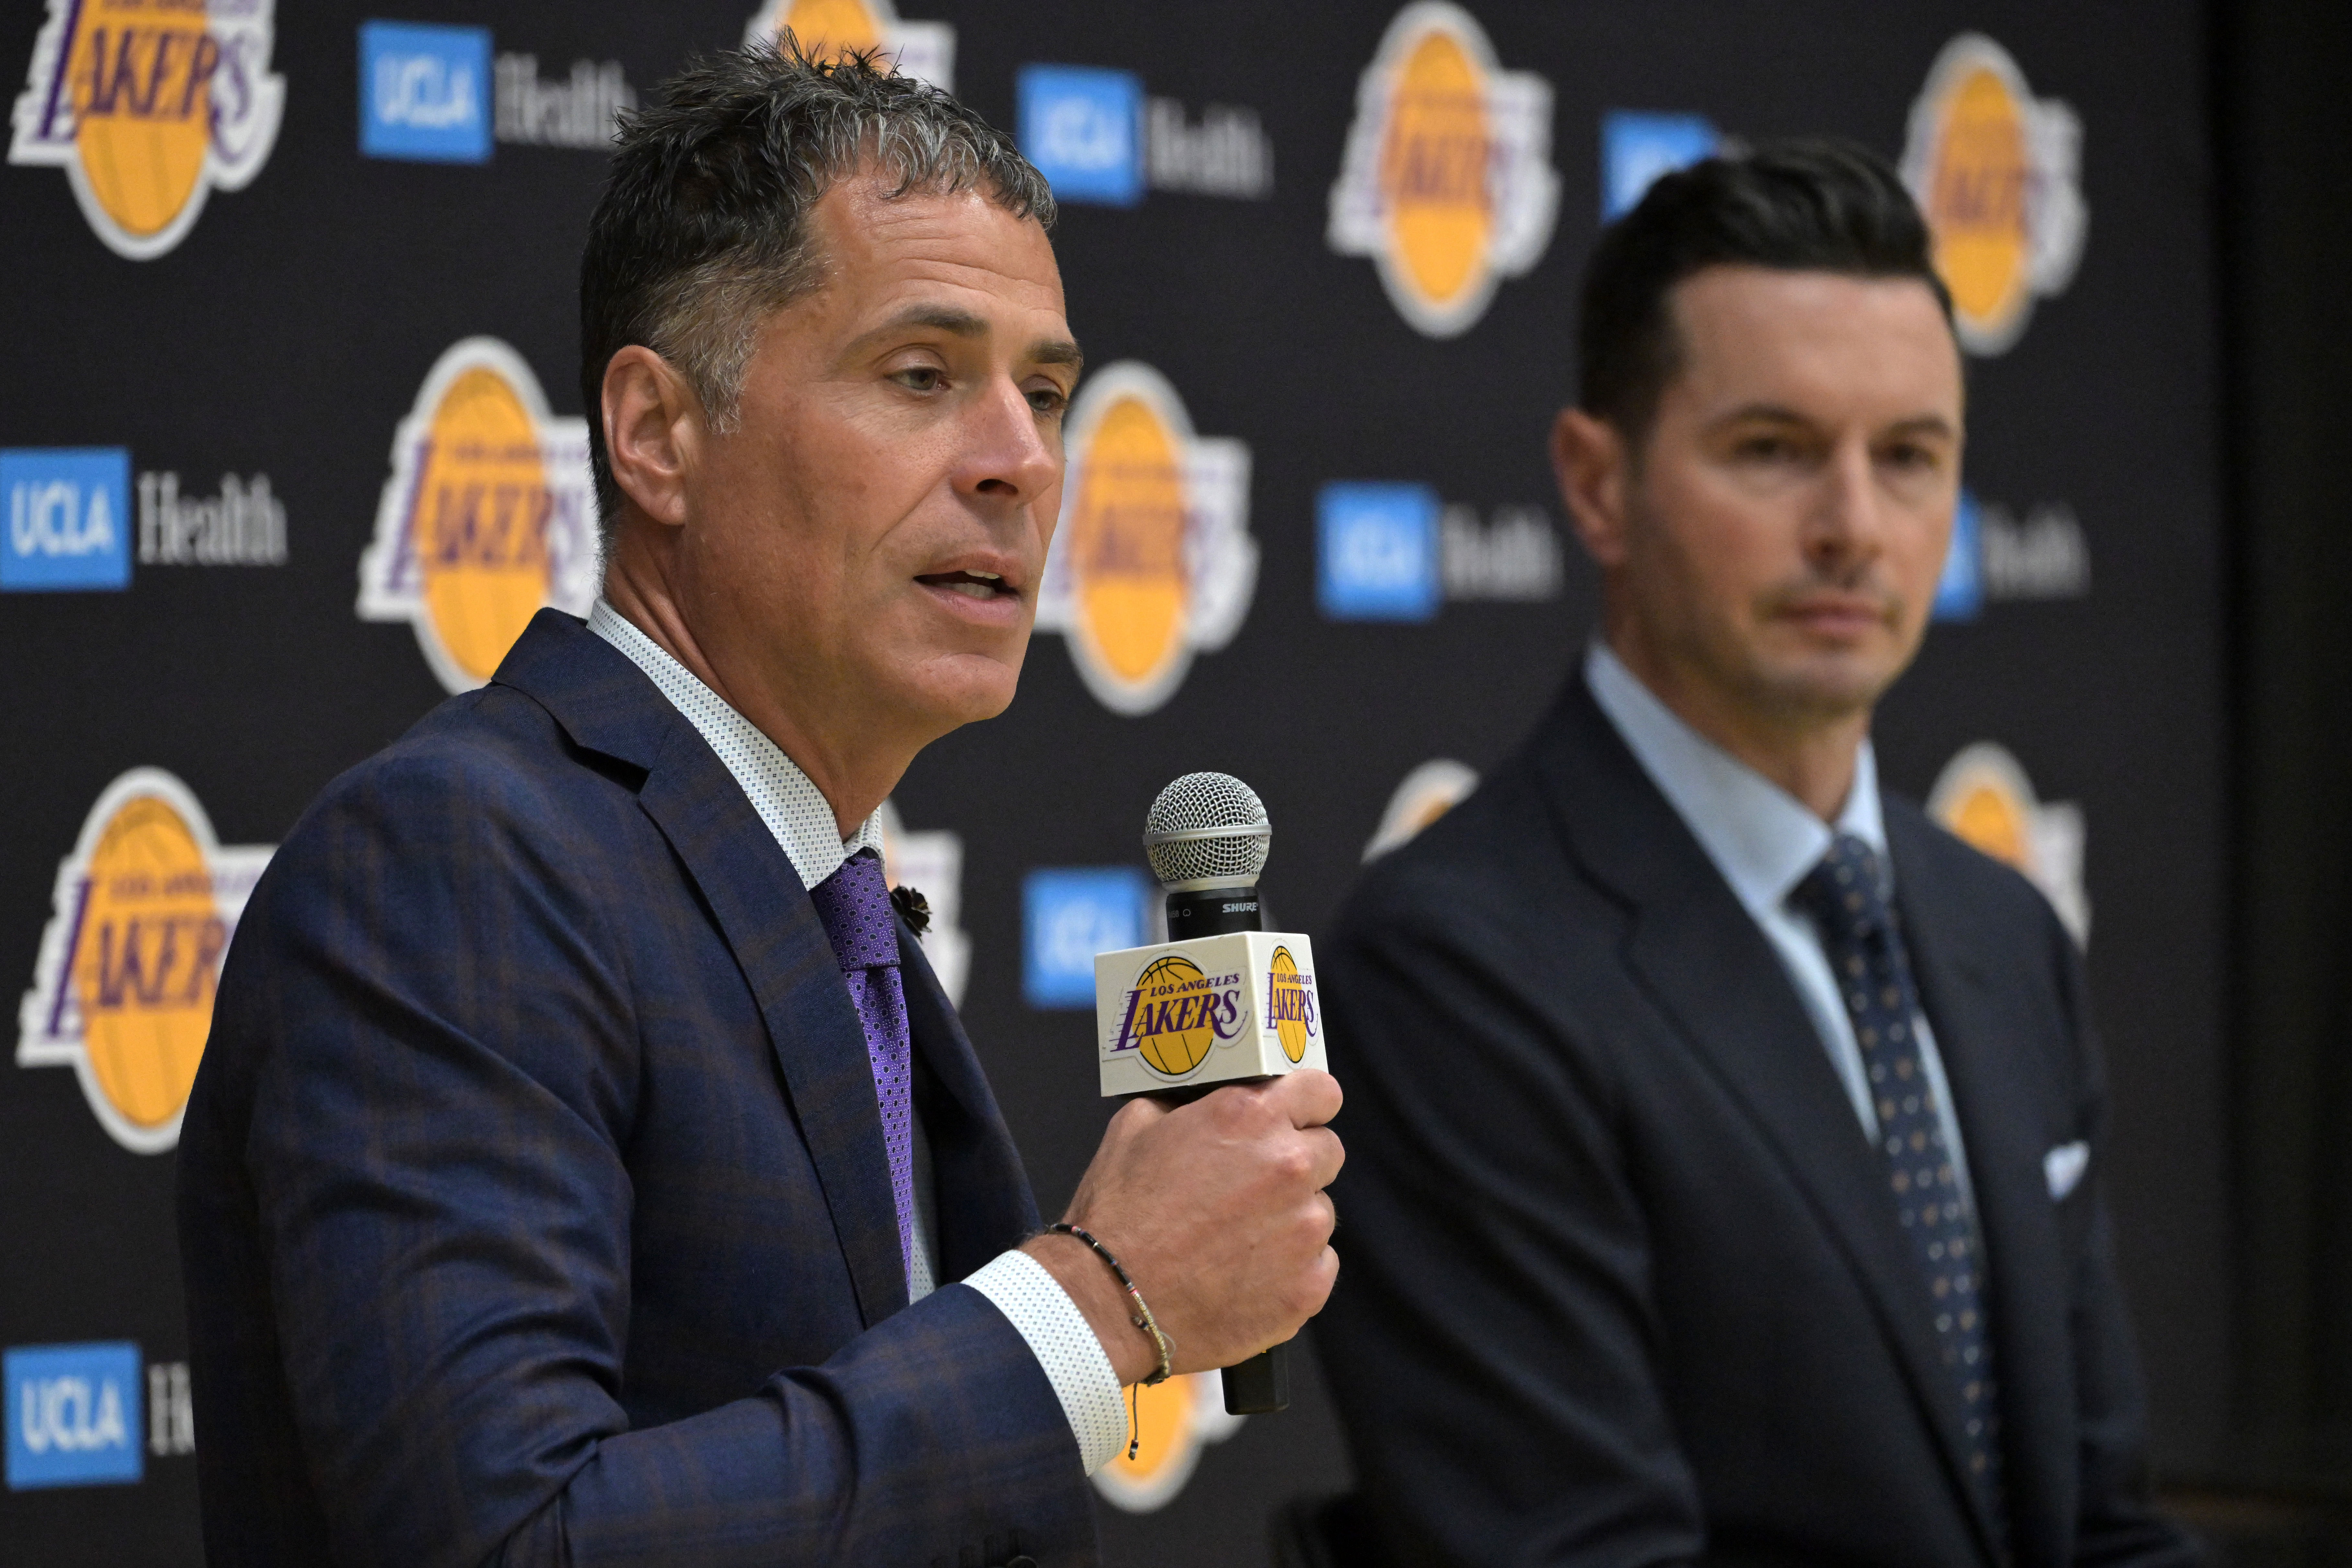 NBA: Loa Angeles Lakers-Press Conference